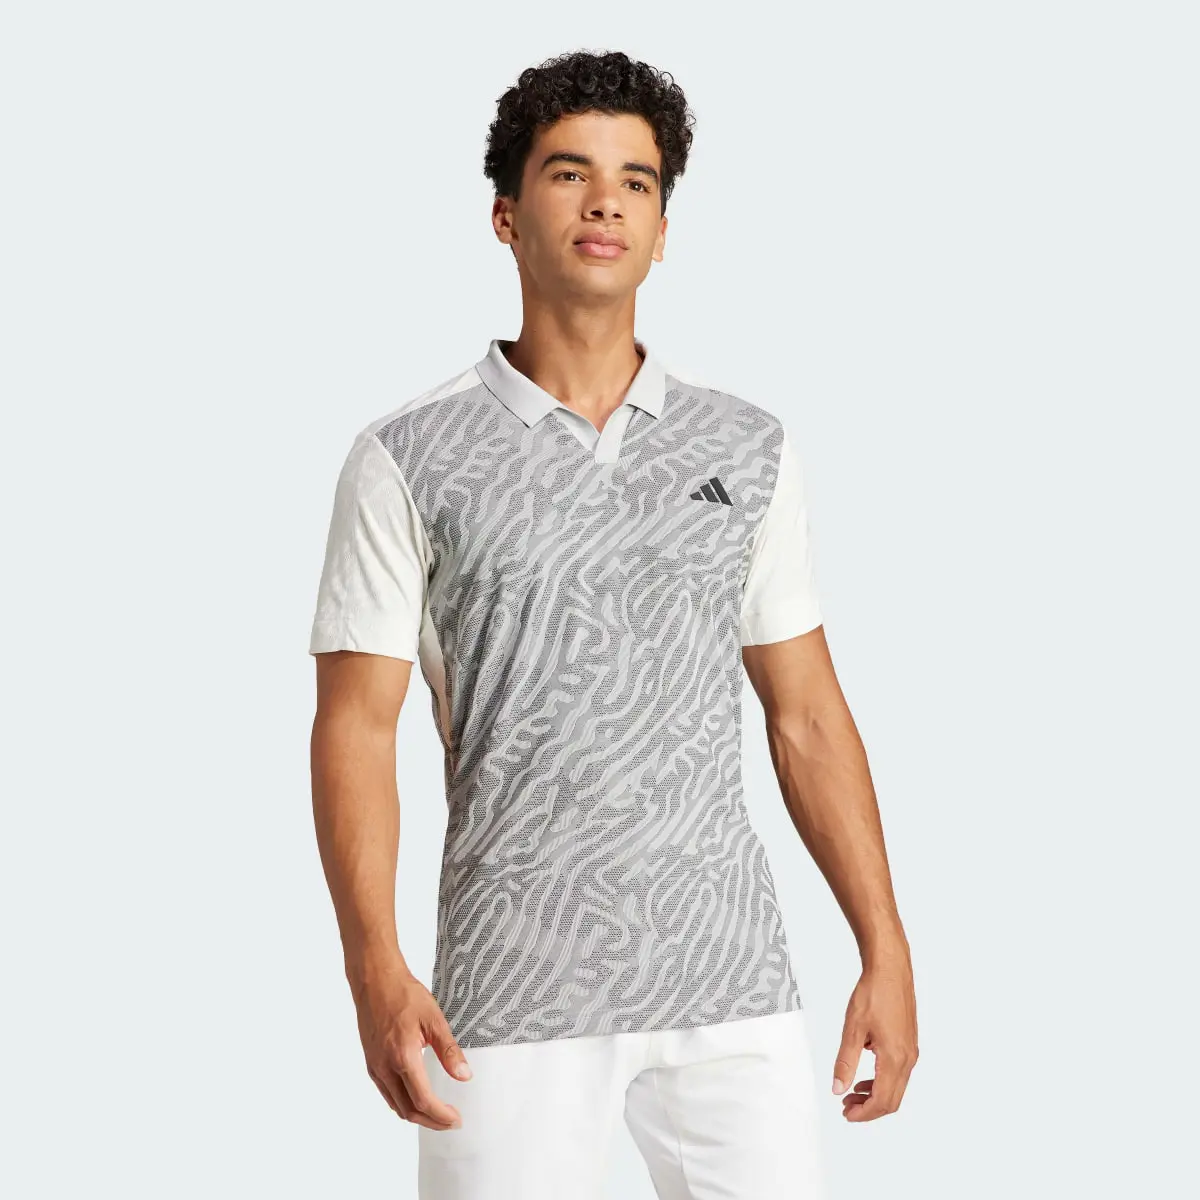 Adidas Tennis Airchill Pro FreeLift Polo Shirt. 2